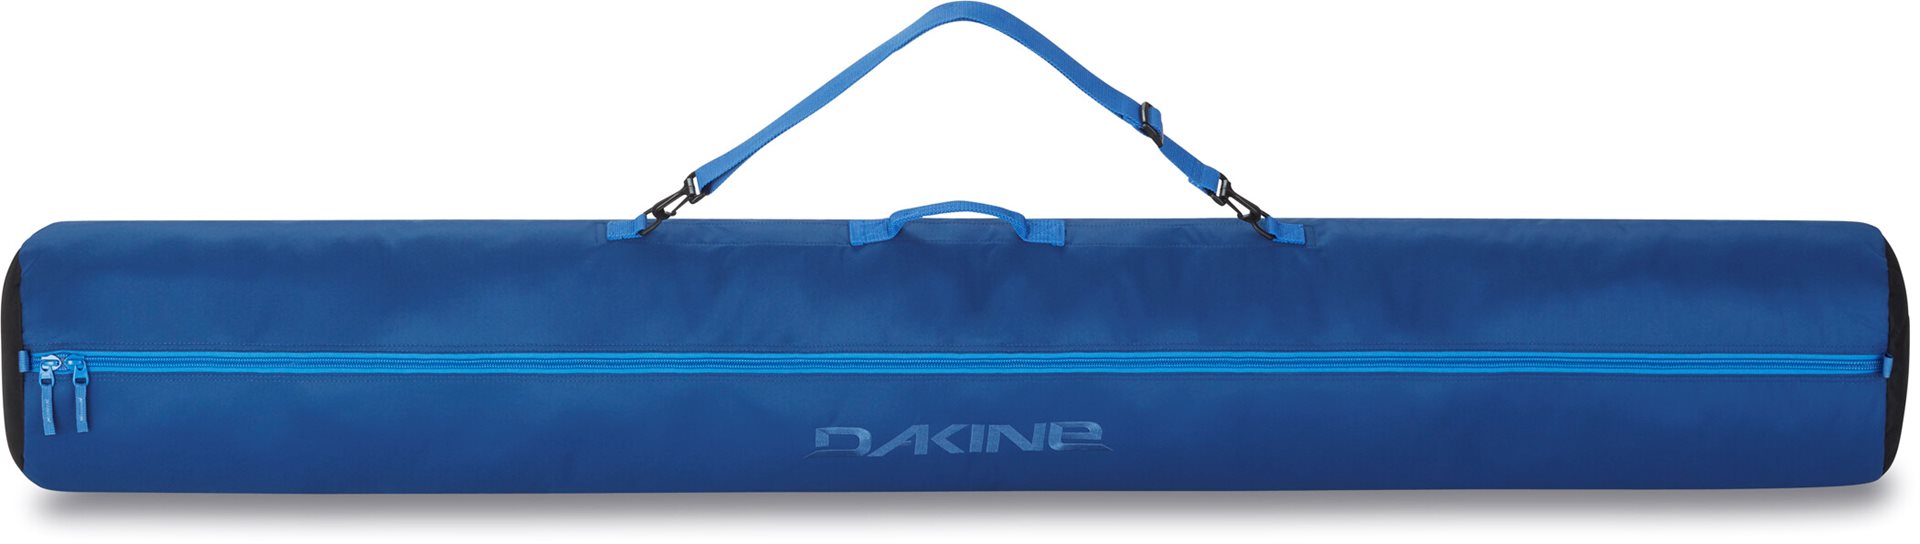 Dakine Ski Sleeve  Deep Blue 190cm Skitas - Reisartikelen-nl